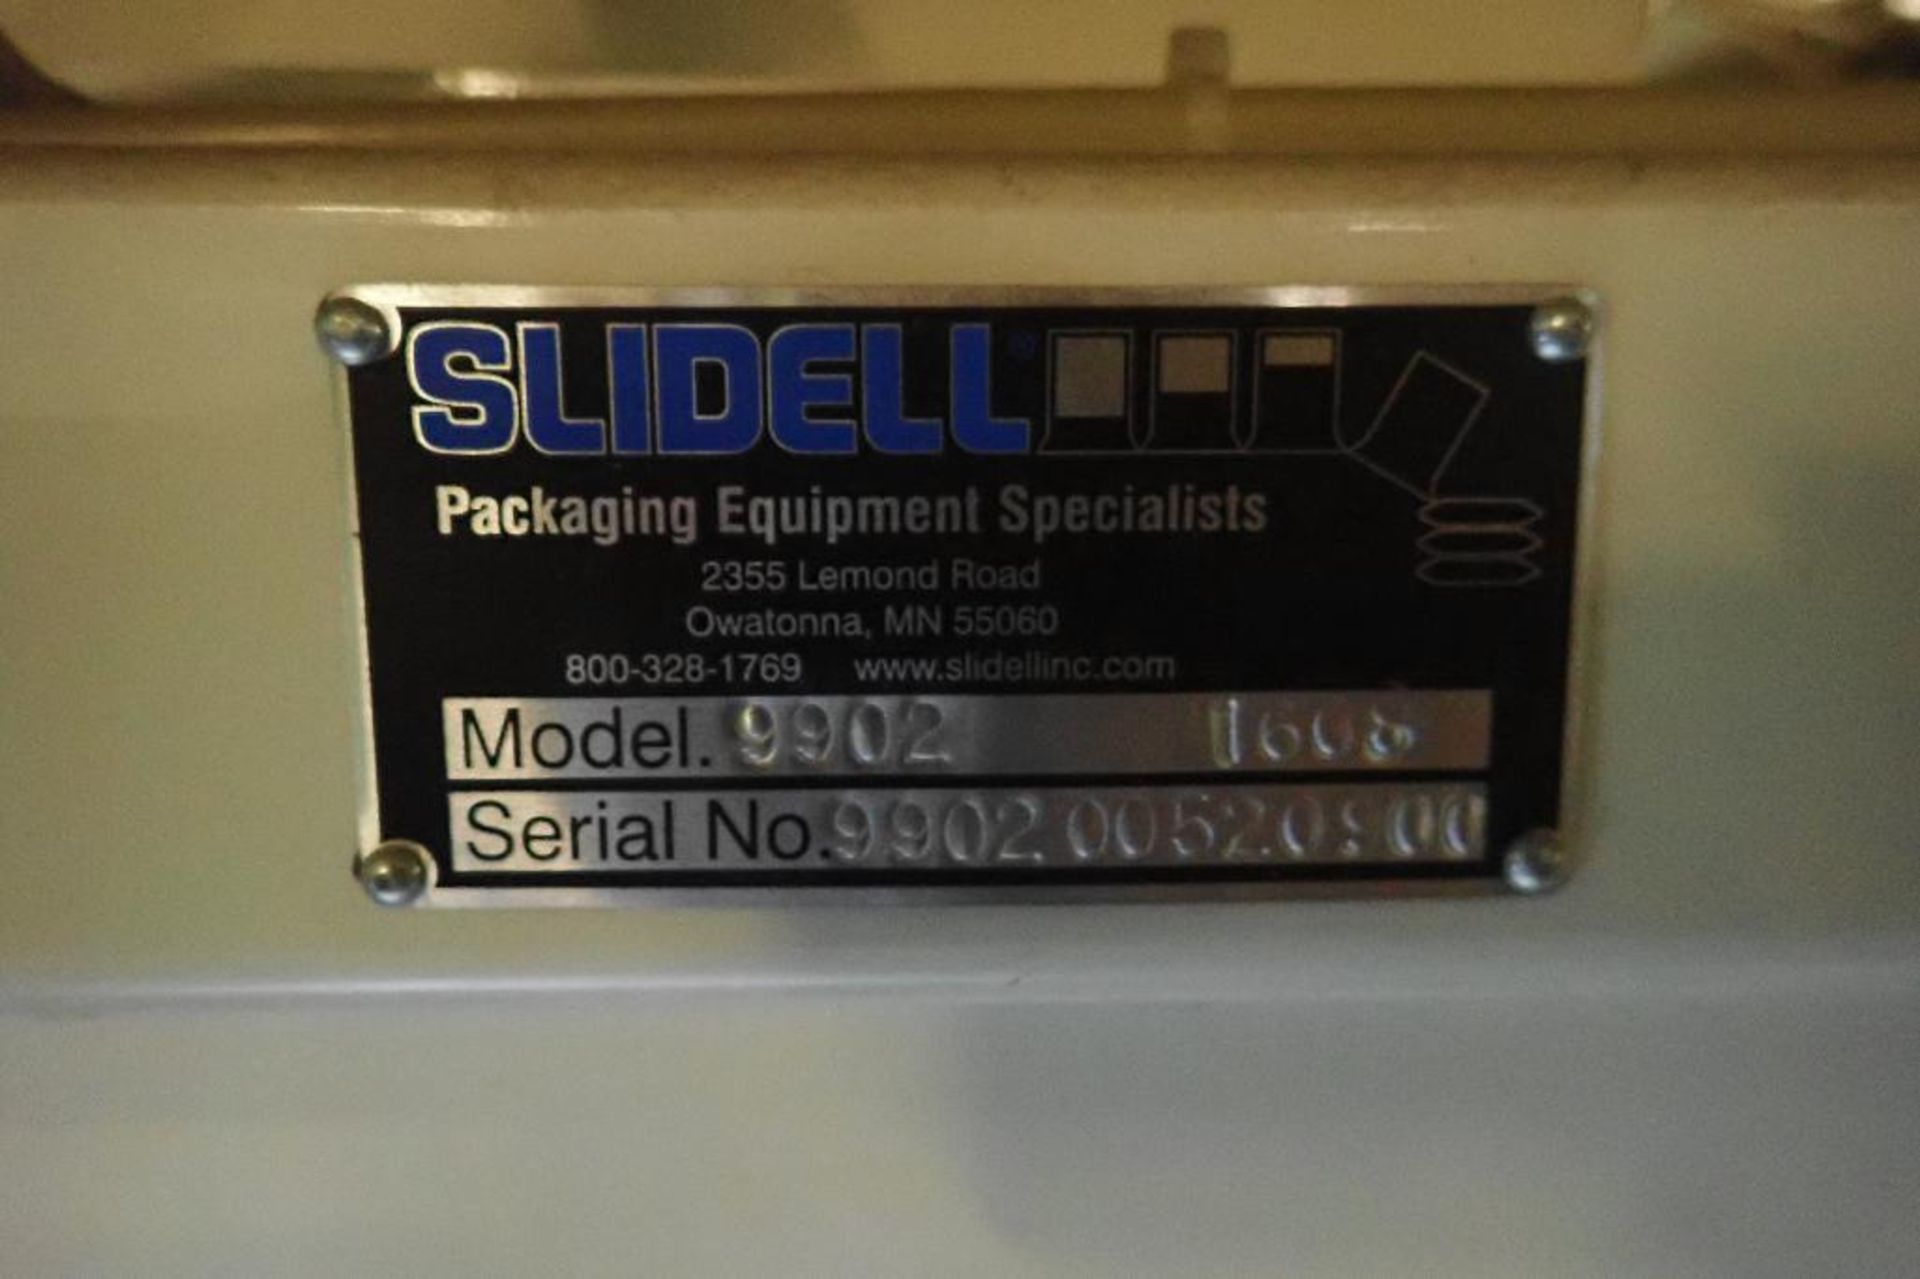 Fischbein bag sealer, Model HAS1003001000000, SN HAS001090100, with Slidell conveyor, Model 1012 160 - Image 26 of 27